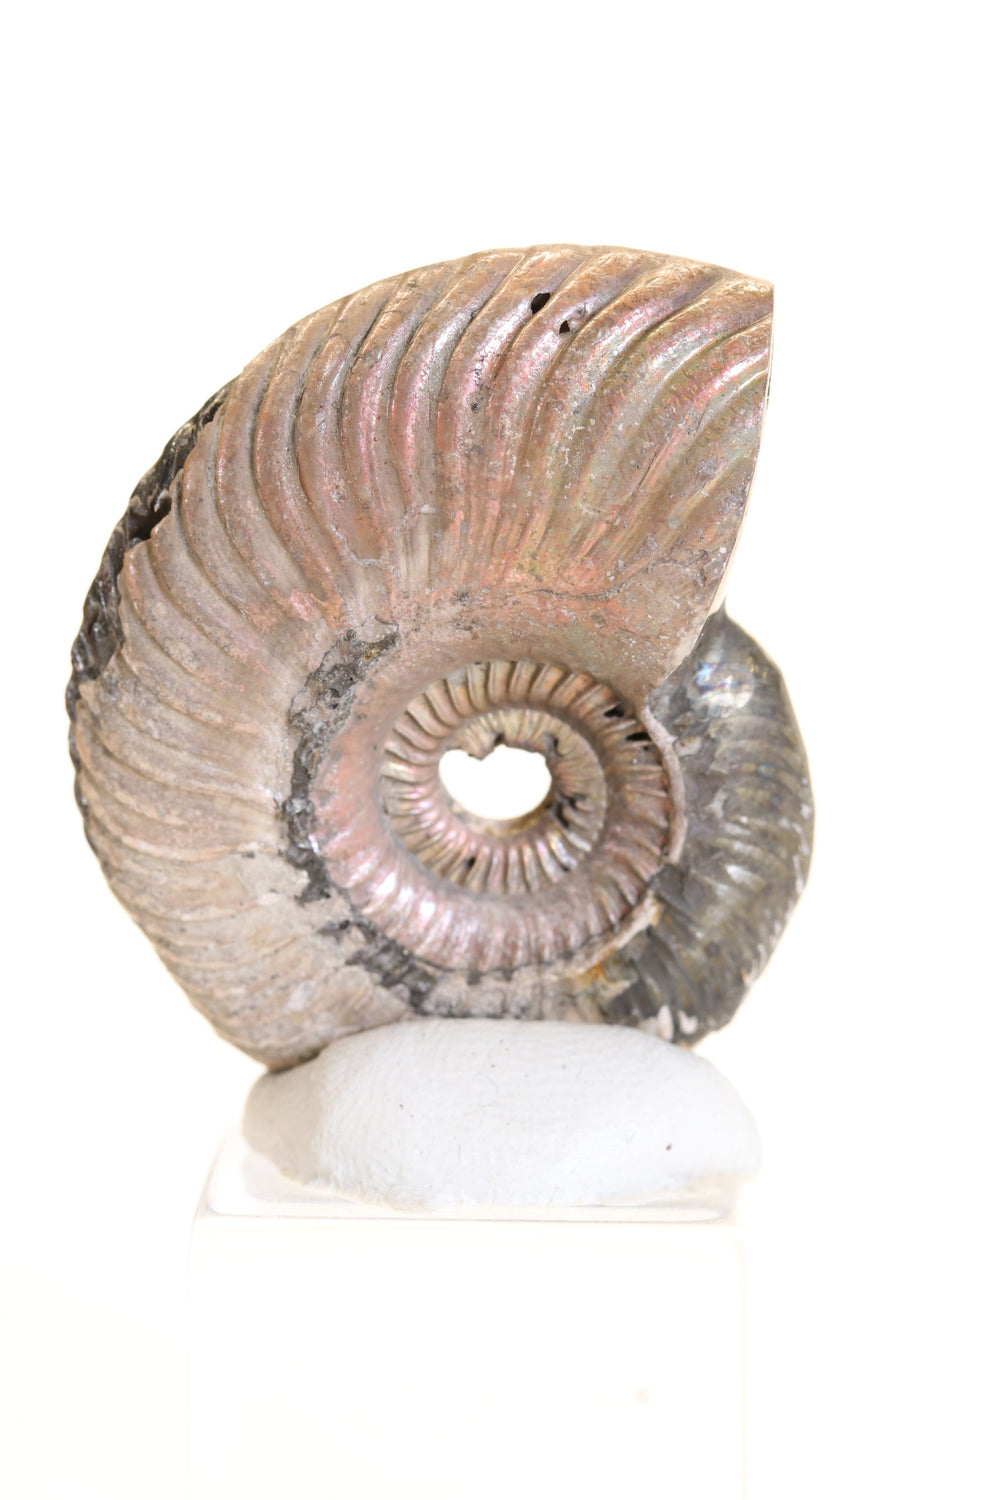 Pyritized Ammonite Fossil TD1769